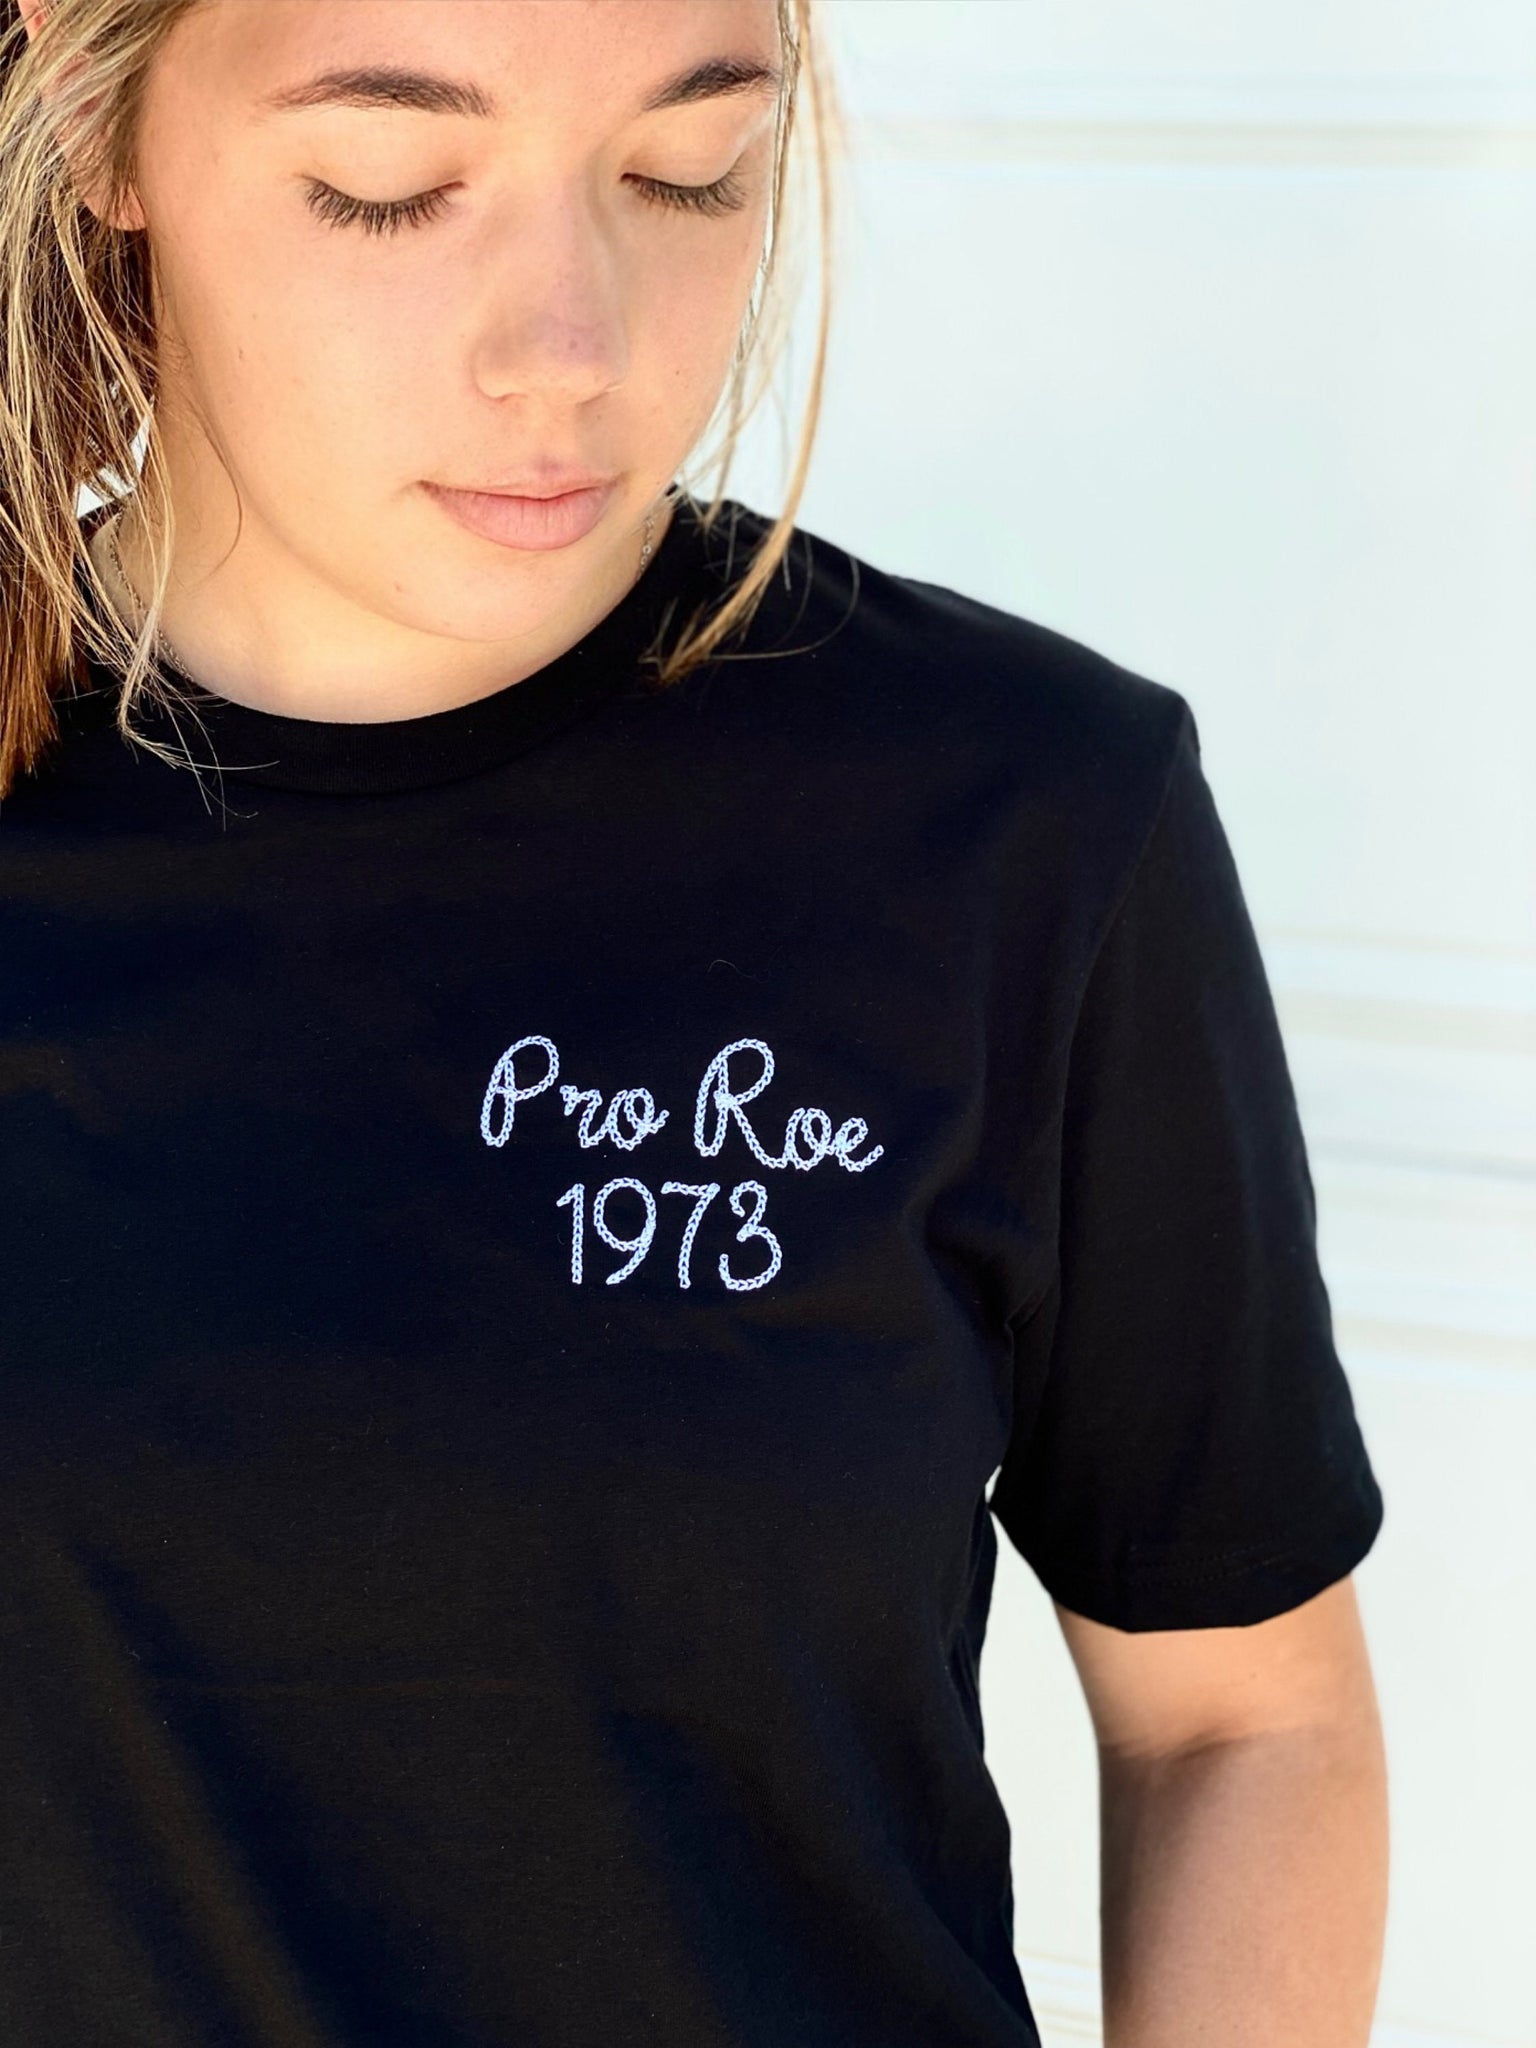 Pro Roe 1973 Shirt, Abortion Rights Supreme Court TShirt, Ruth Bader Ginsburg Shirt, Protect Womens Rights, Feminist TShirt, Right To Choose